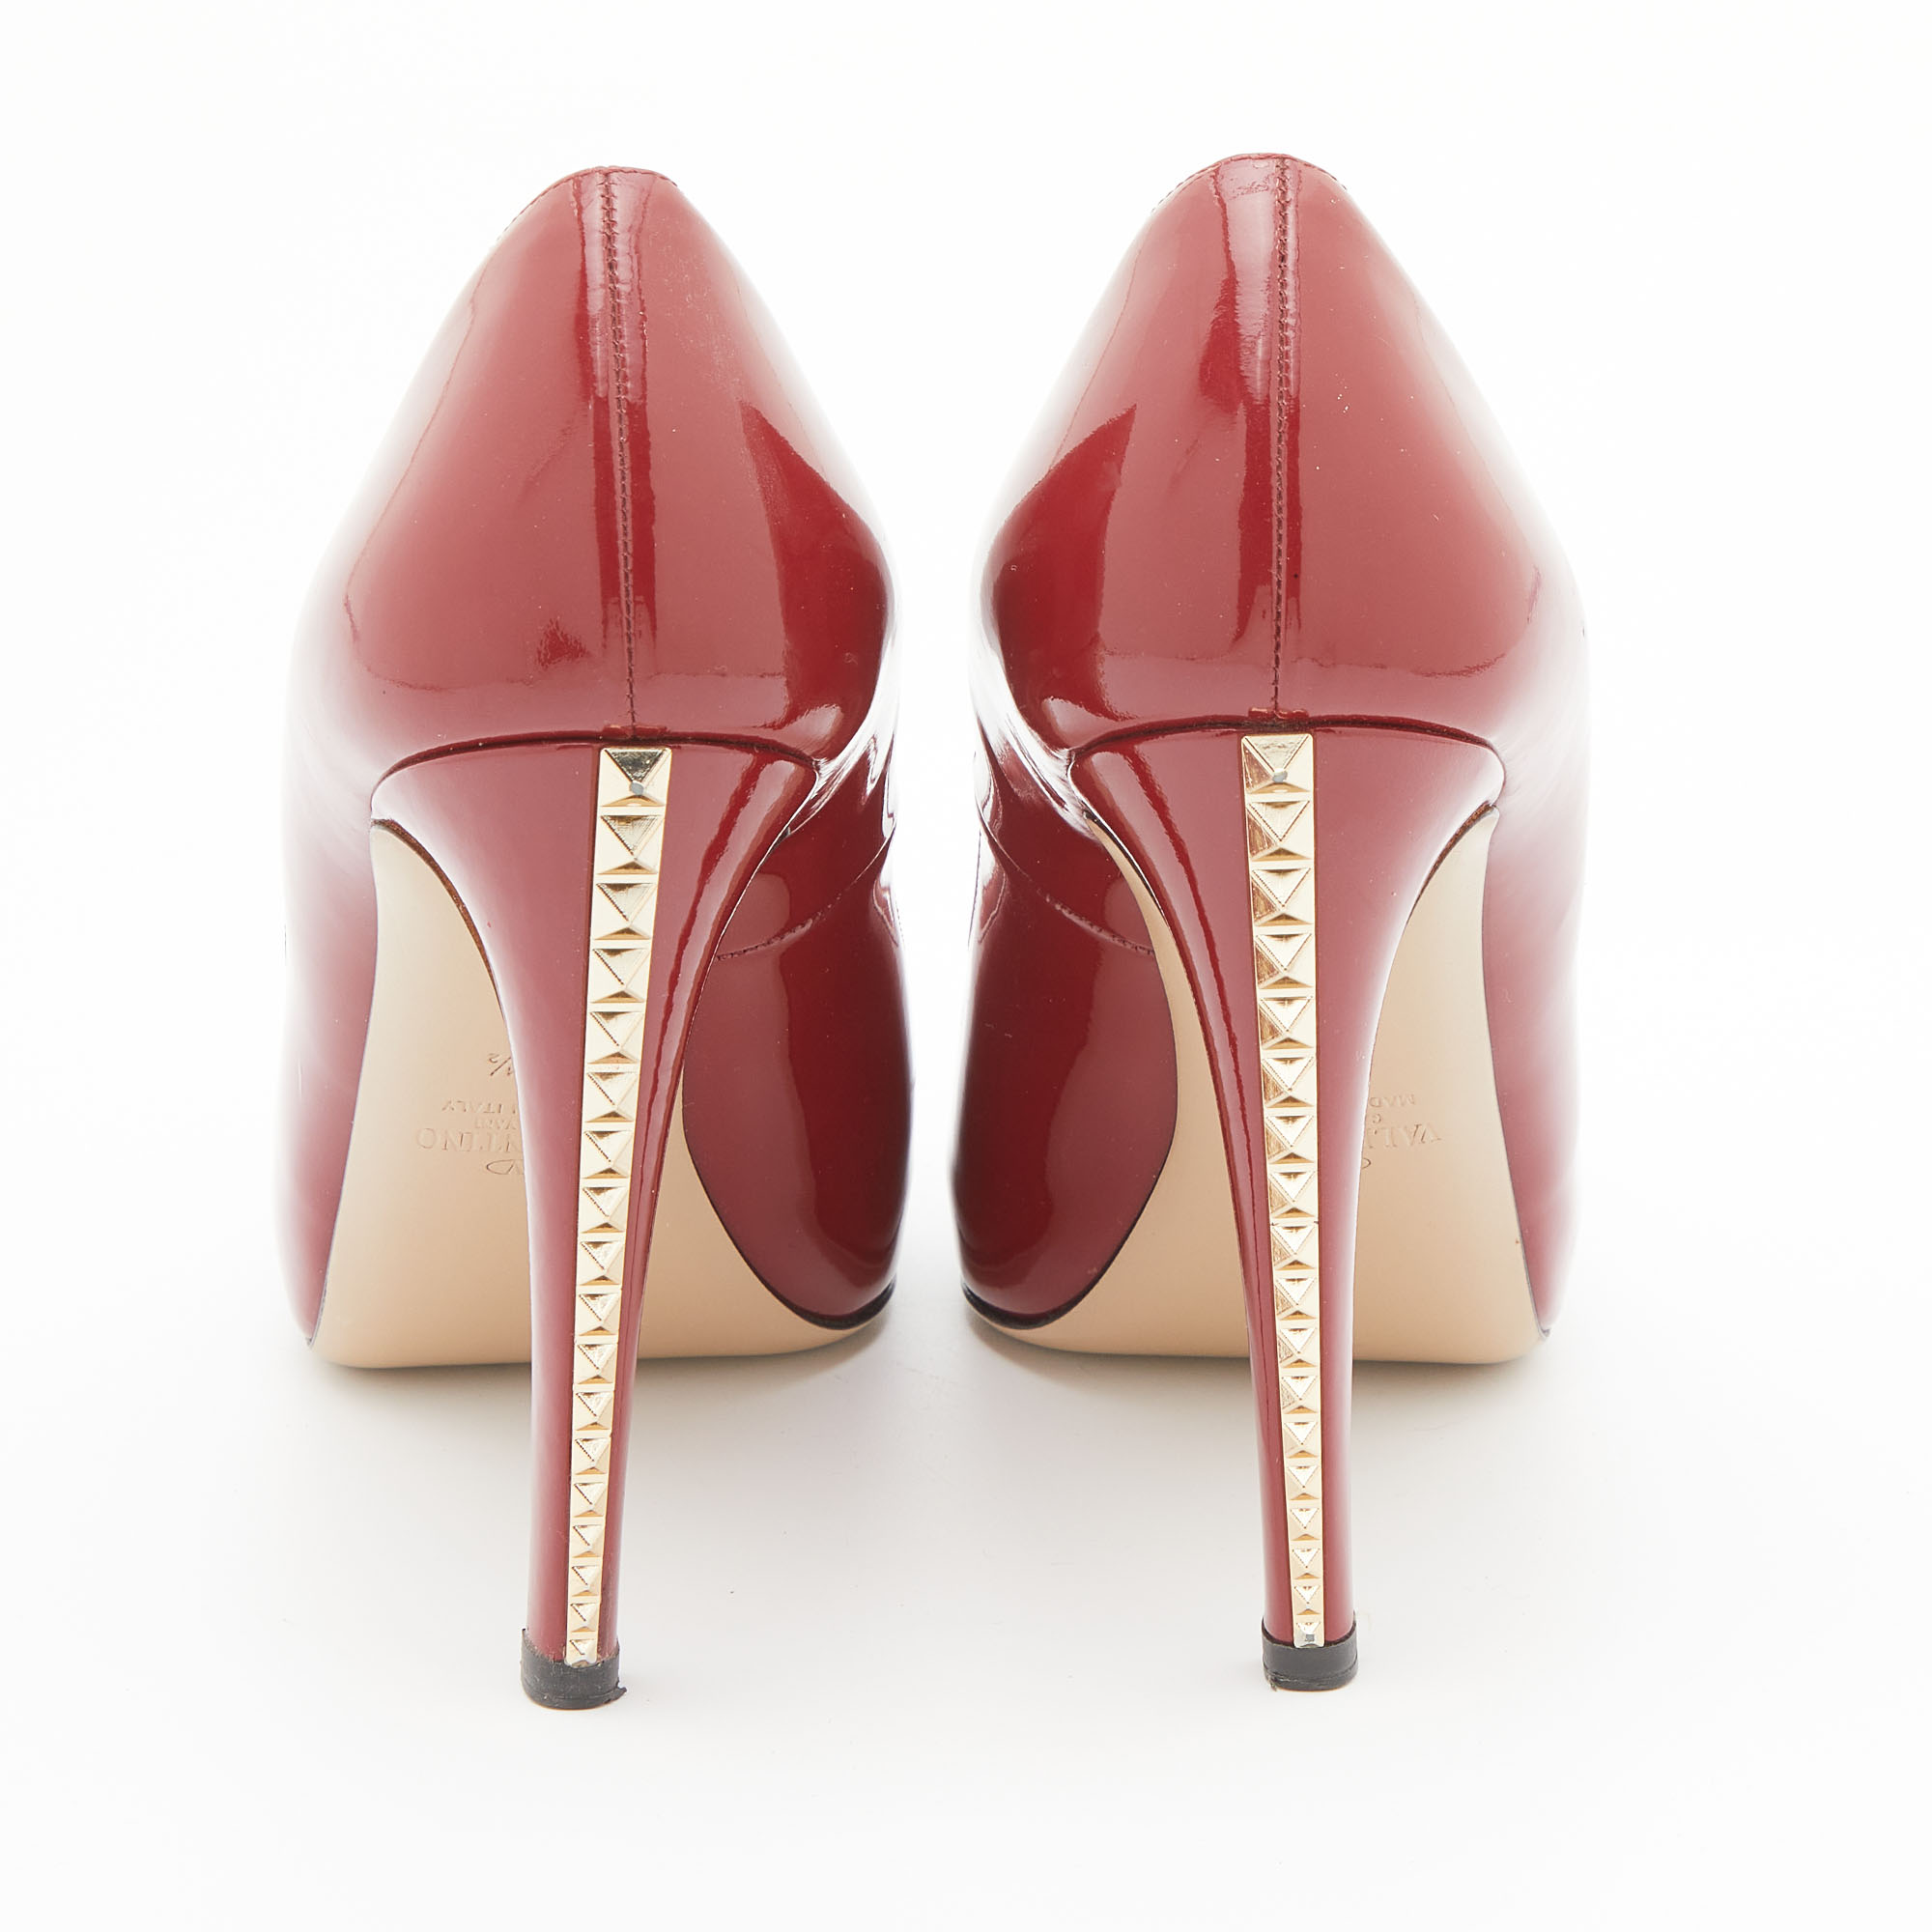 Valentino Red Patent Leather Rockstud Heel Peep Toe Pumps Size 38.5